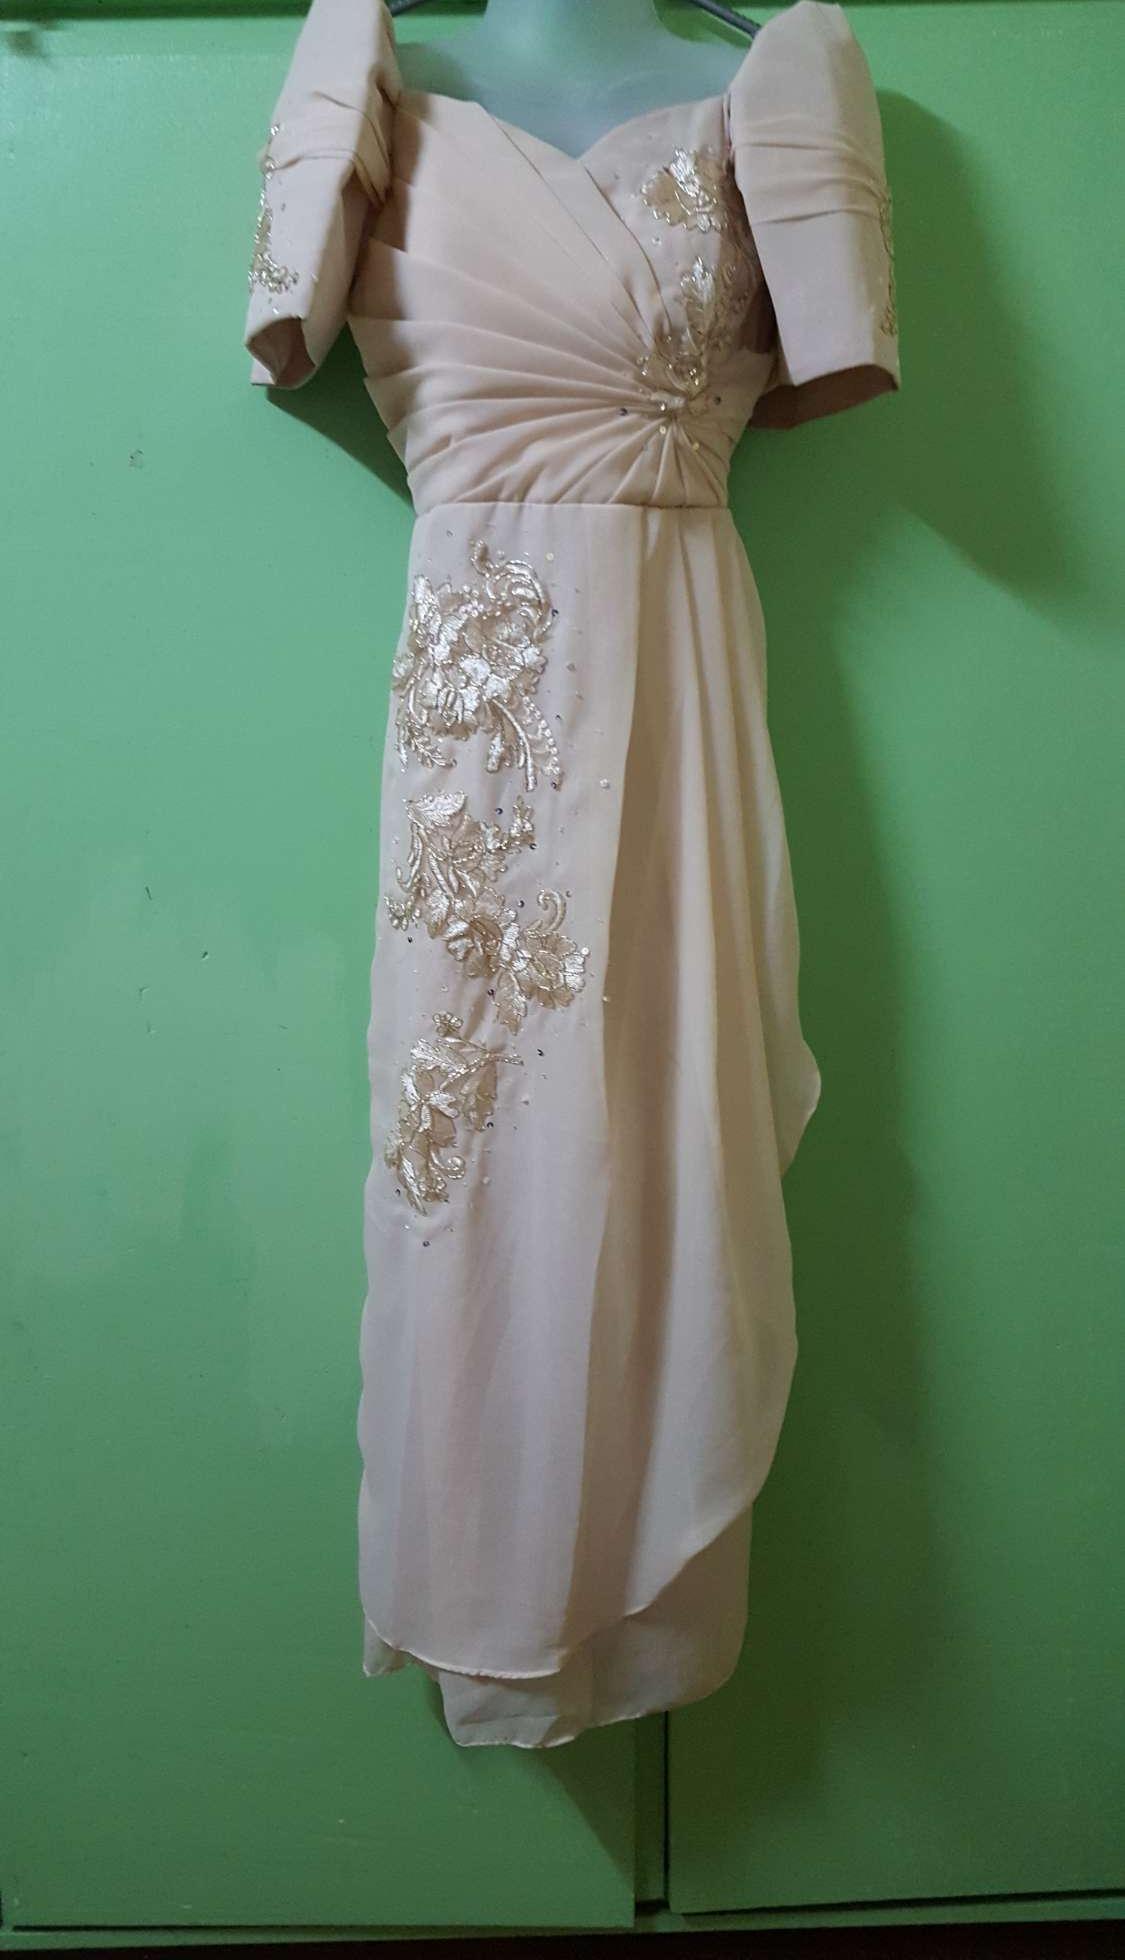 buy filipiniana dress online